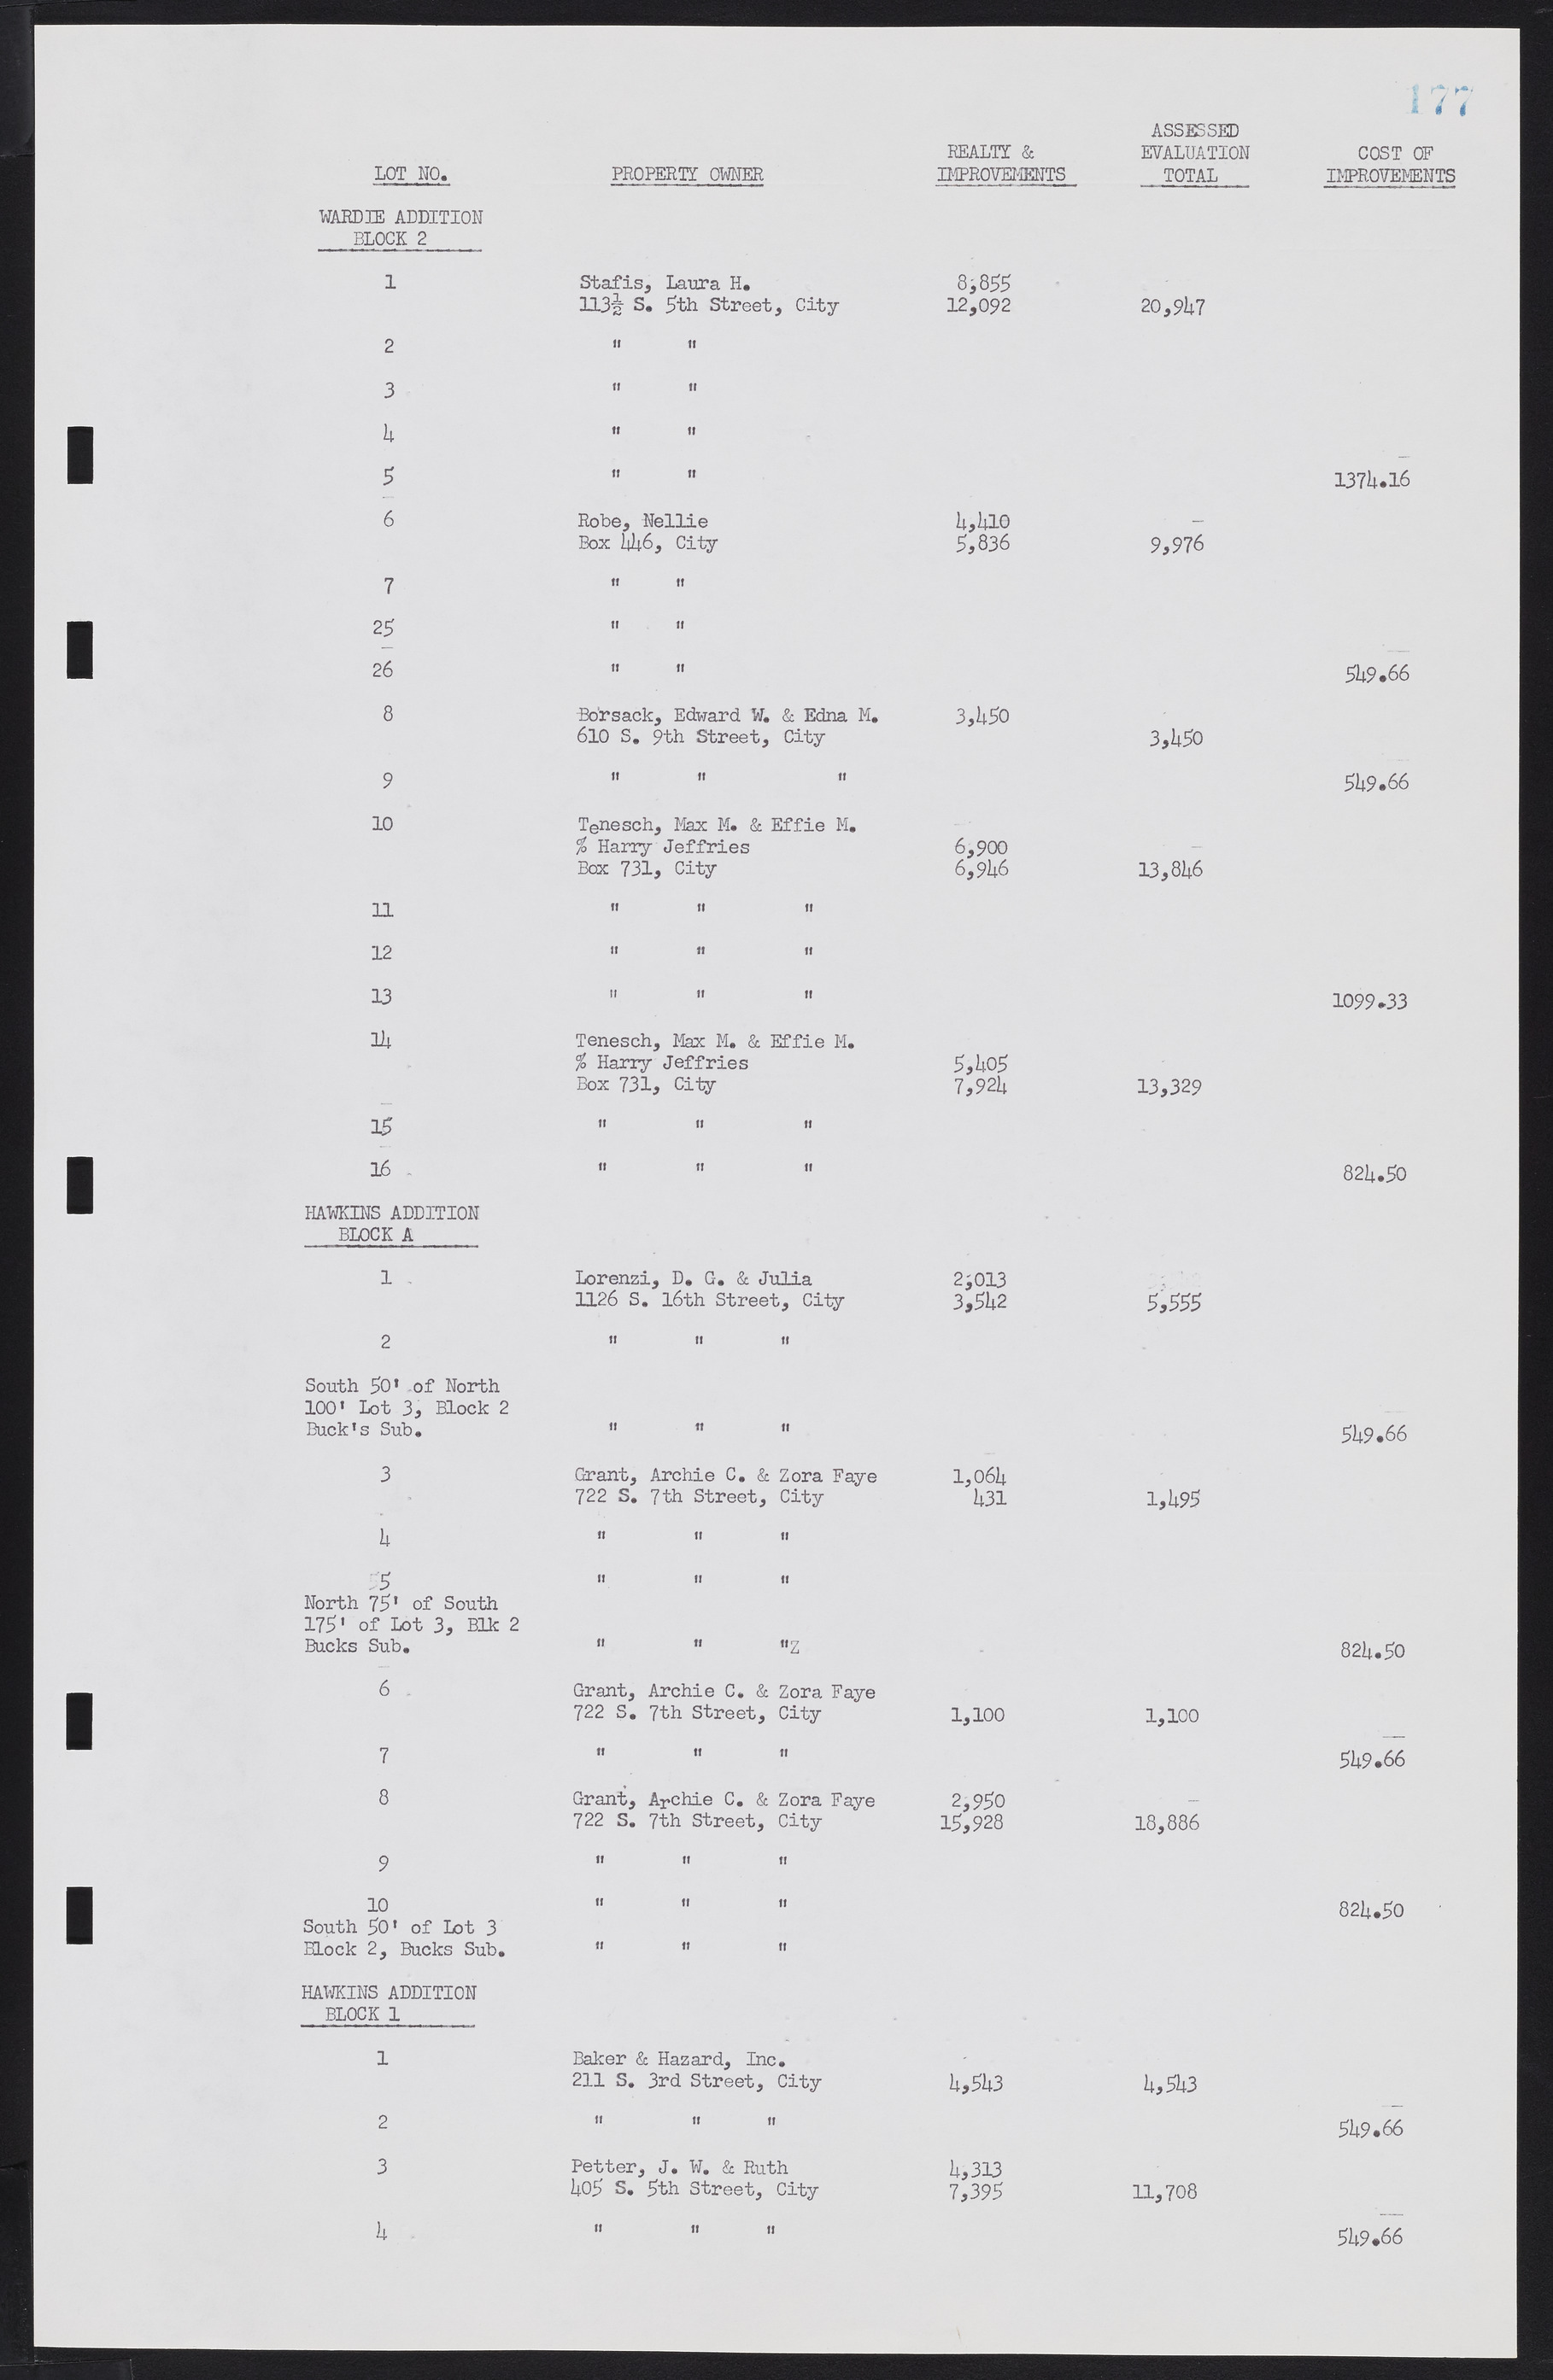 Las Vegas City Commission Minutes, February 17, 1954 to September 21, 1955, lvc000009-183